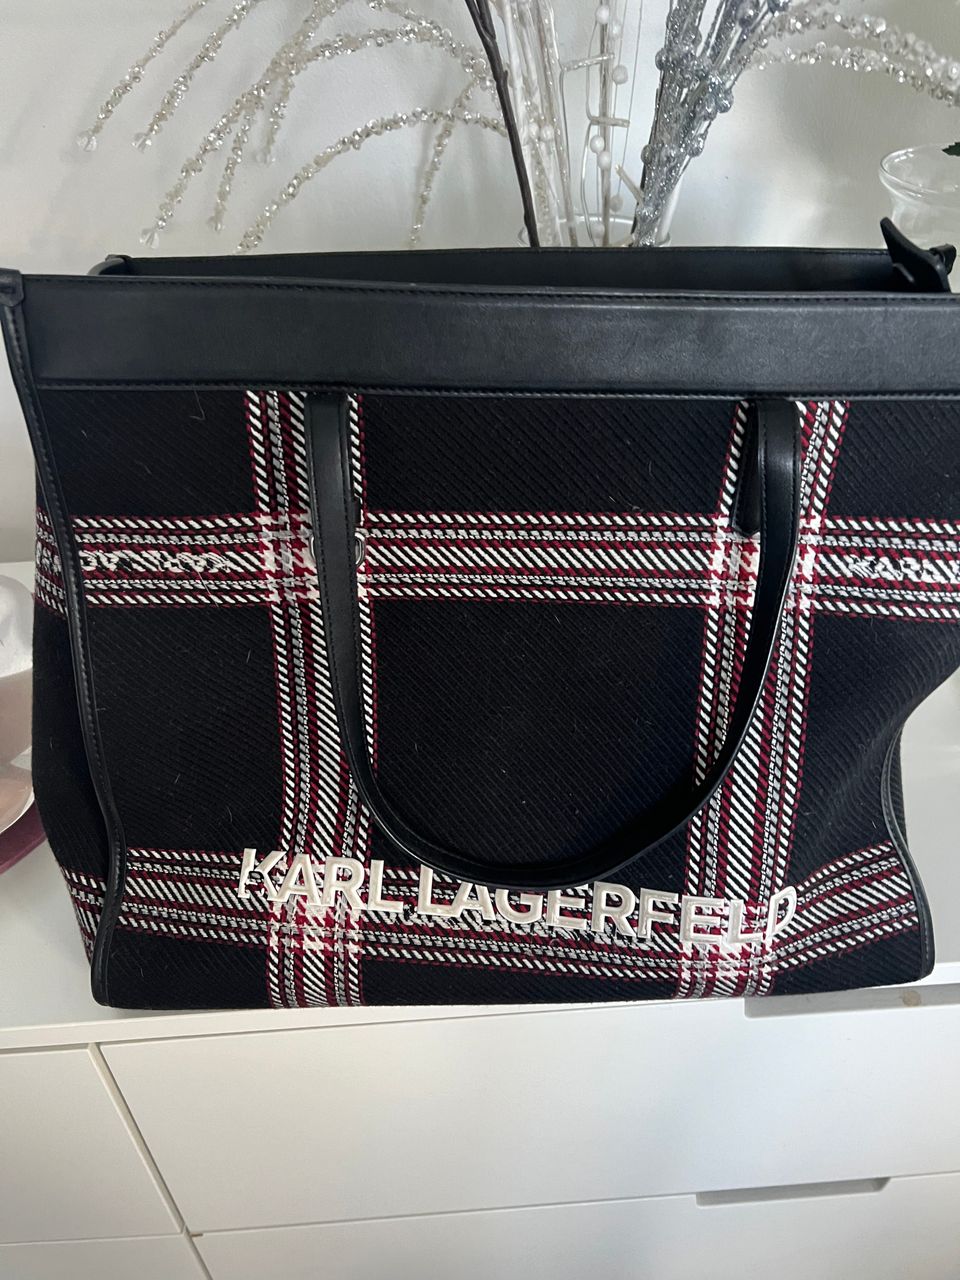 Kark Lagerfeldin laukku